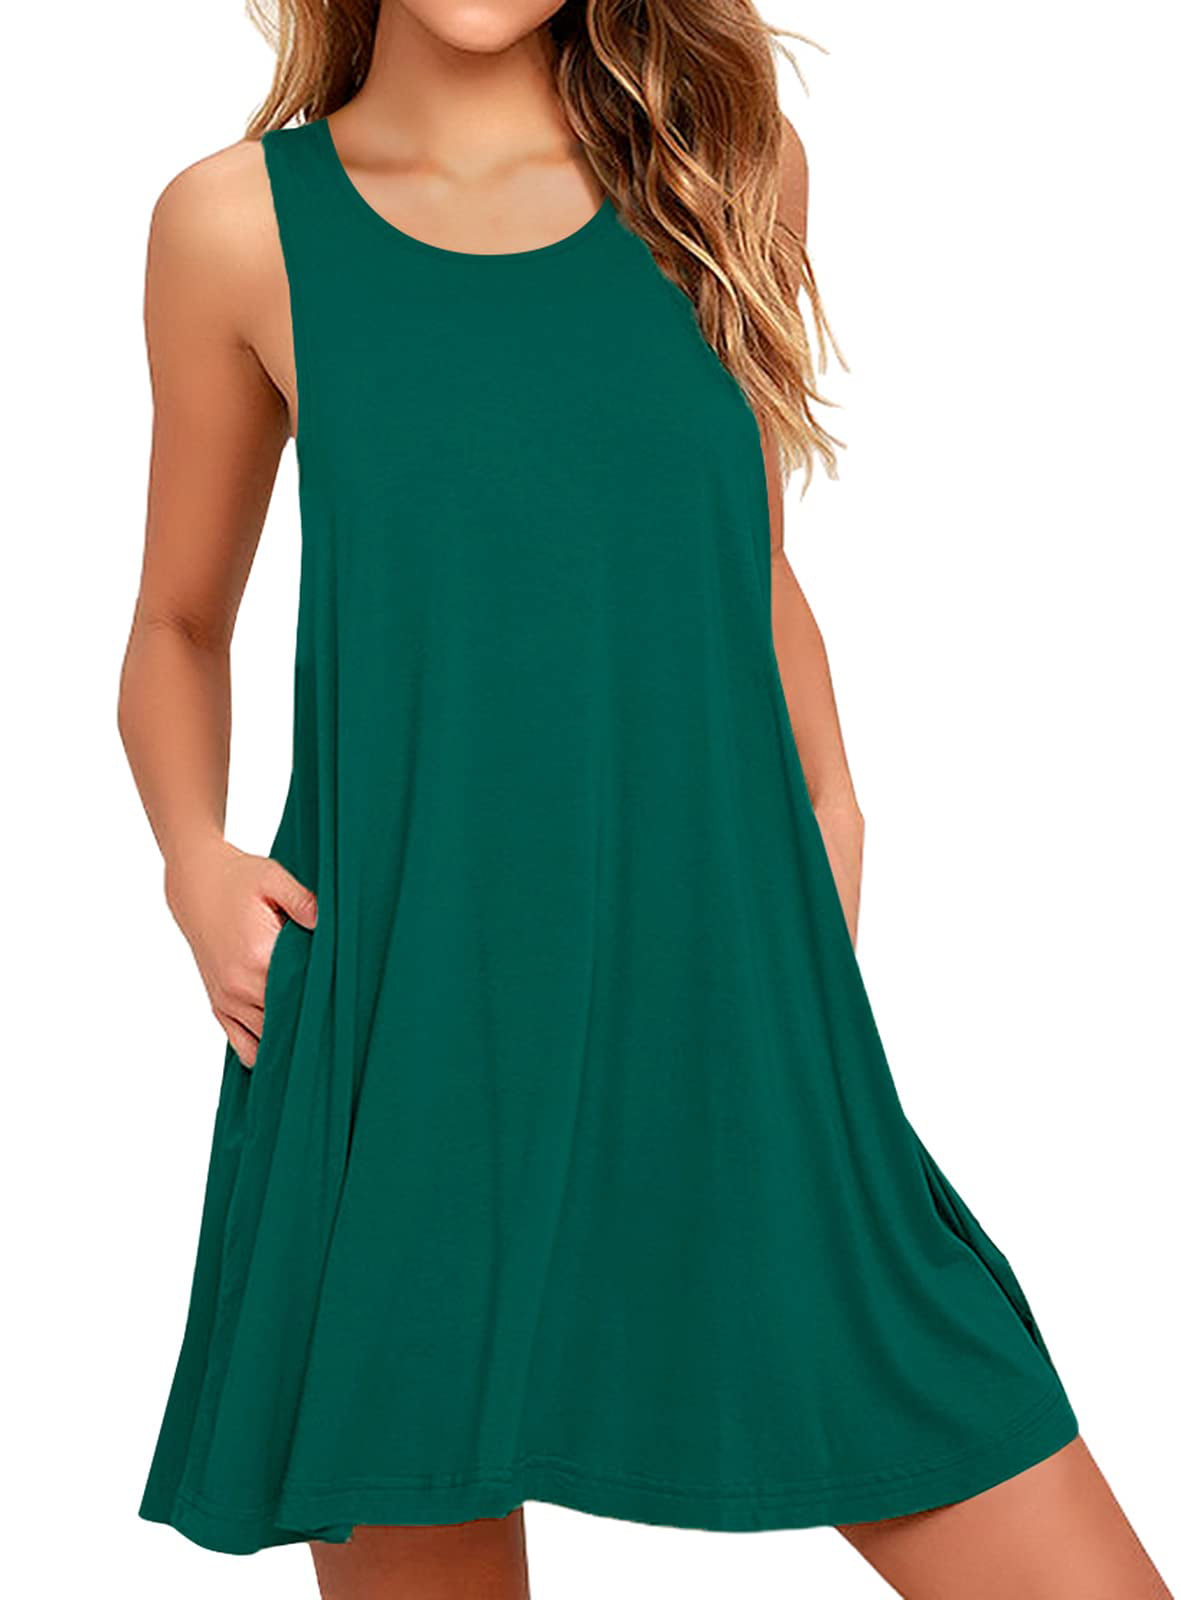 LA LEELA Women's Beach Dress Swing Tunic T-Shirt Dress US 14-18W Turquoise_O671 